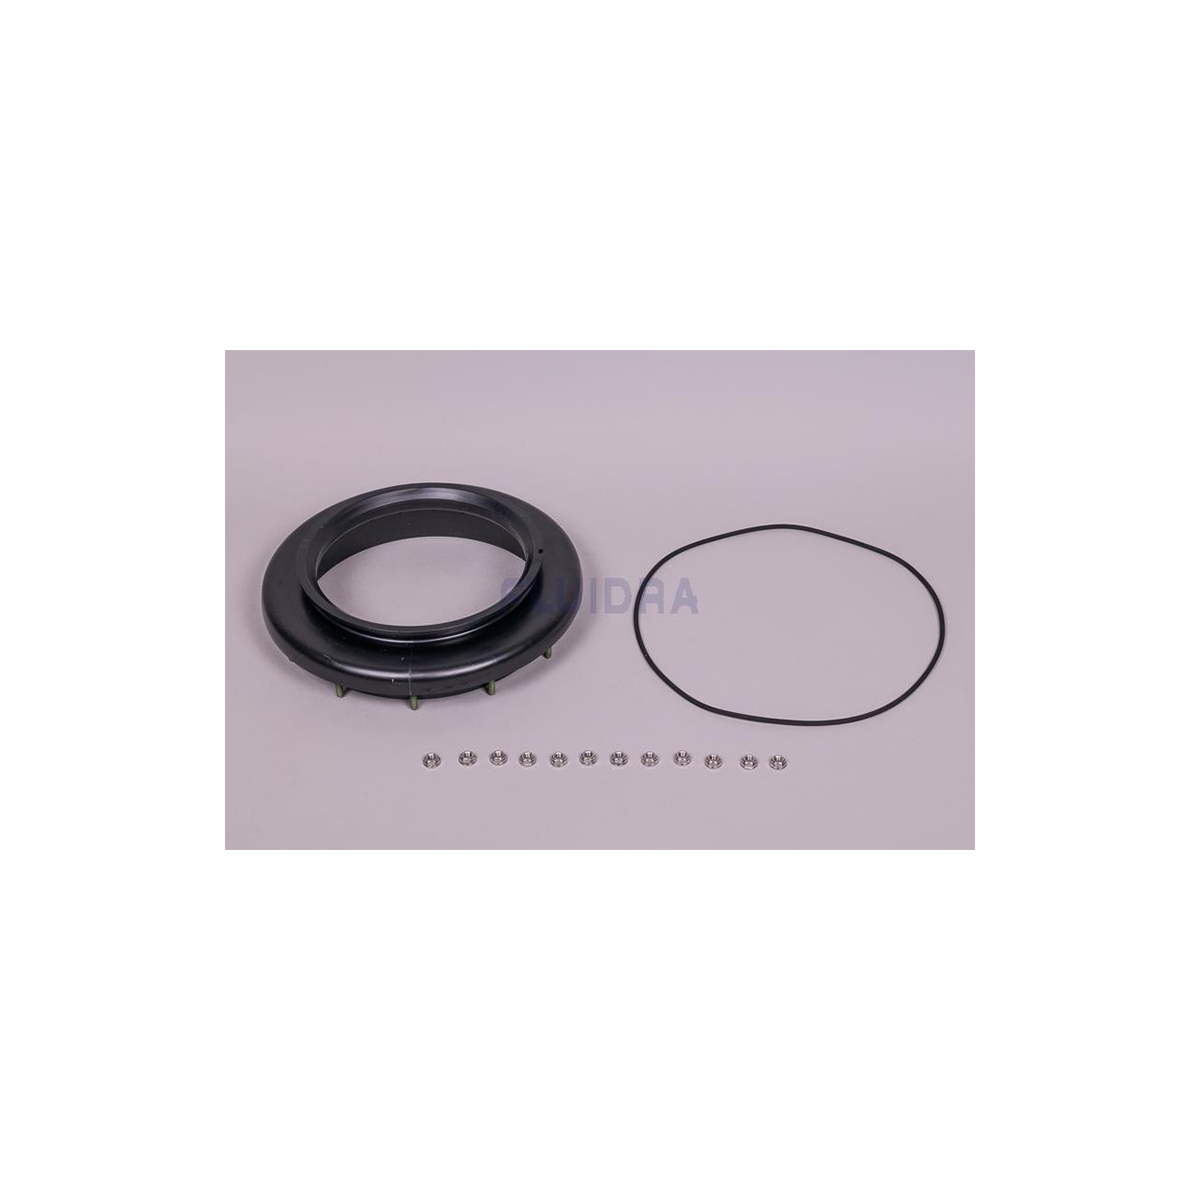 Aster 550 Top Filter Neck Ring Set AstralPool